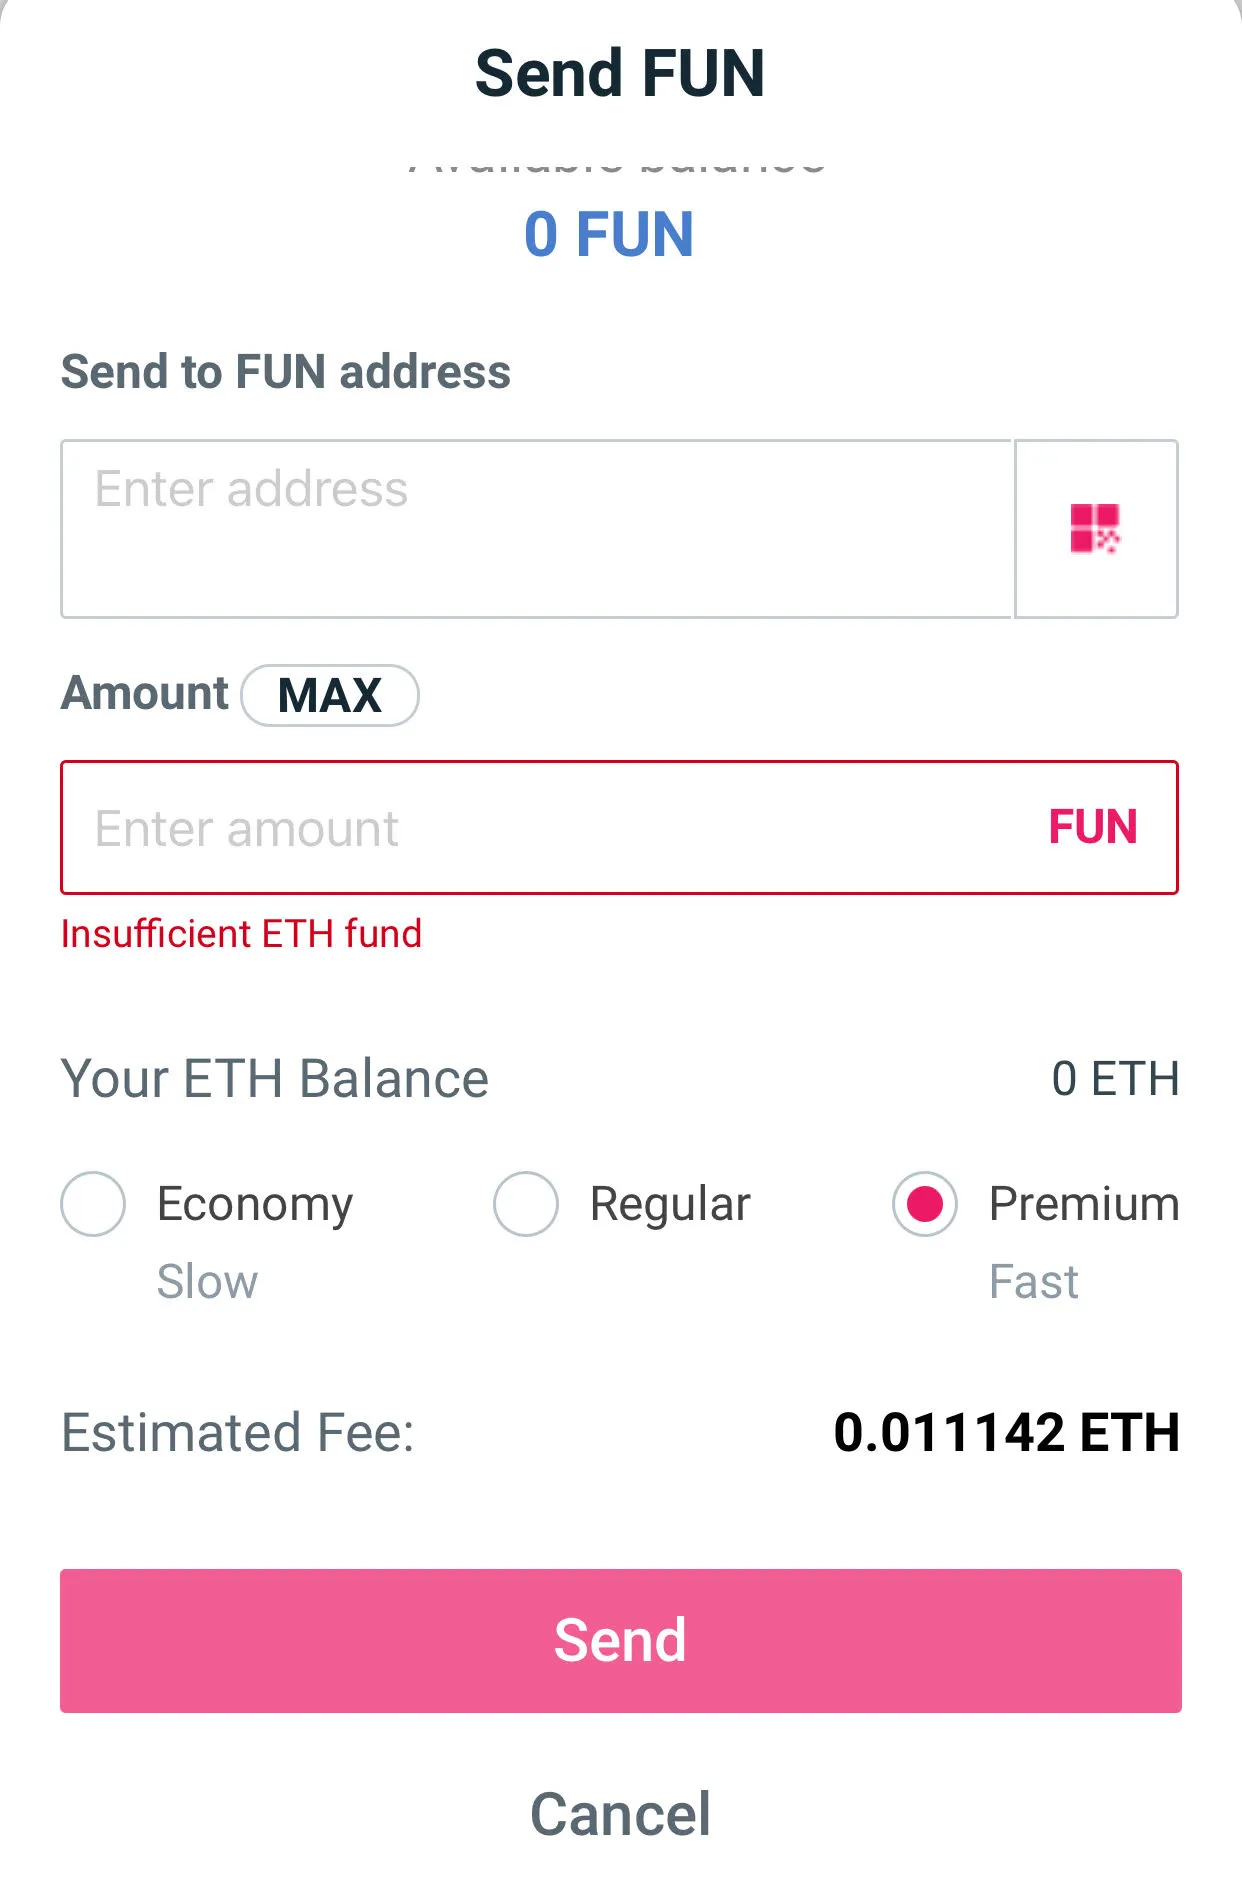 Envíar Funtoken desde XFUN Wallet